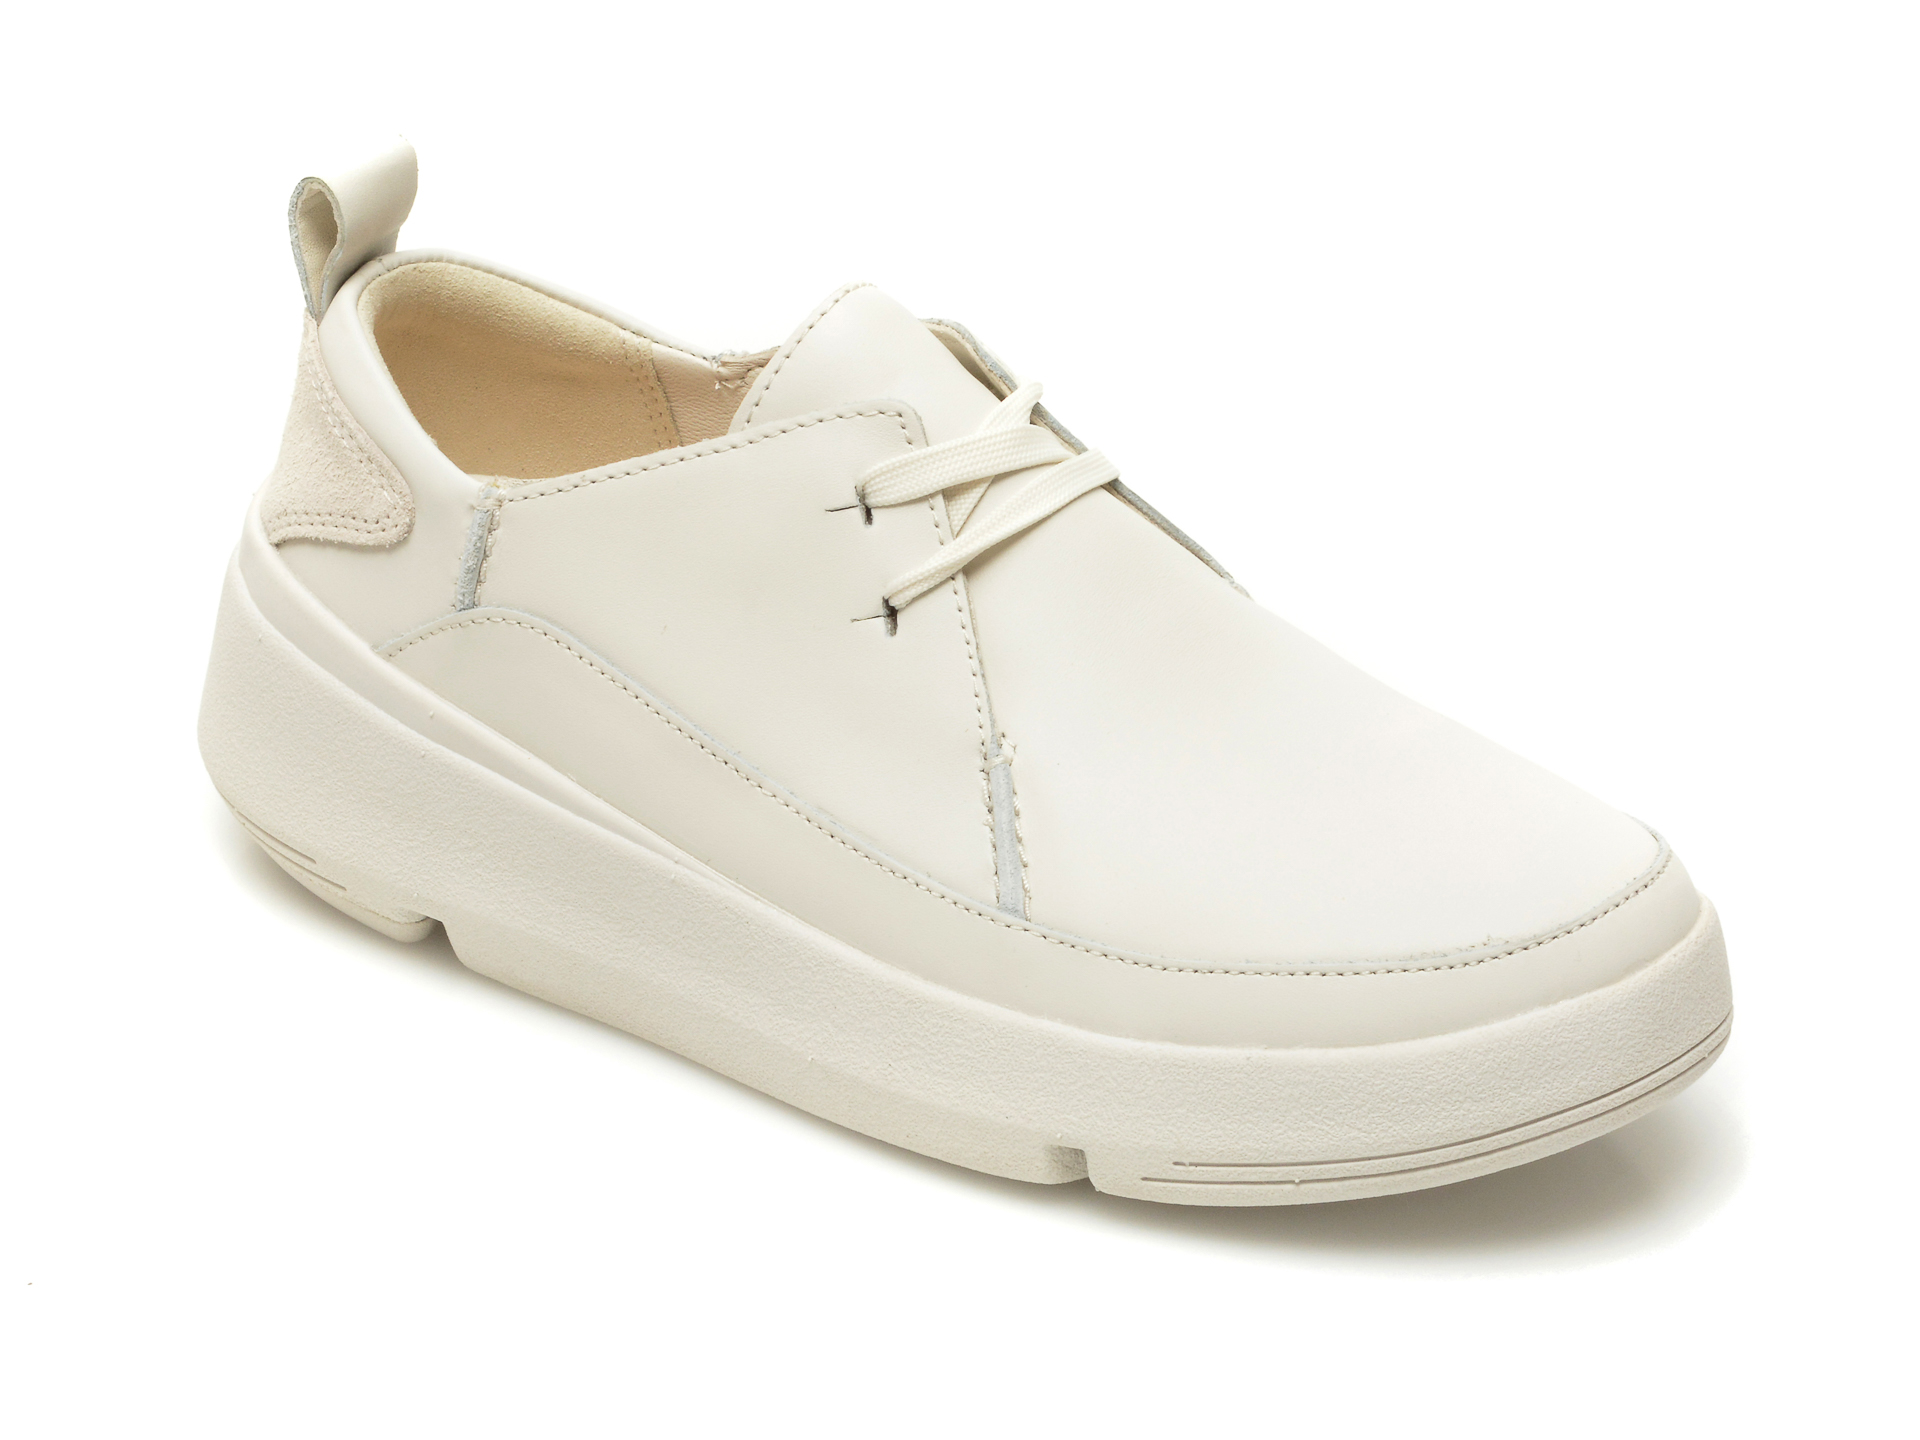 Pantofi CLARKS albi, Tri Flash Walk, din piele naturala Clarks Clarks